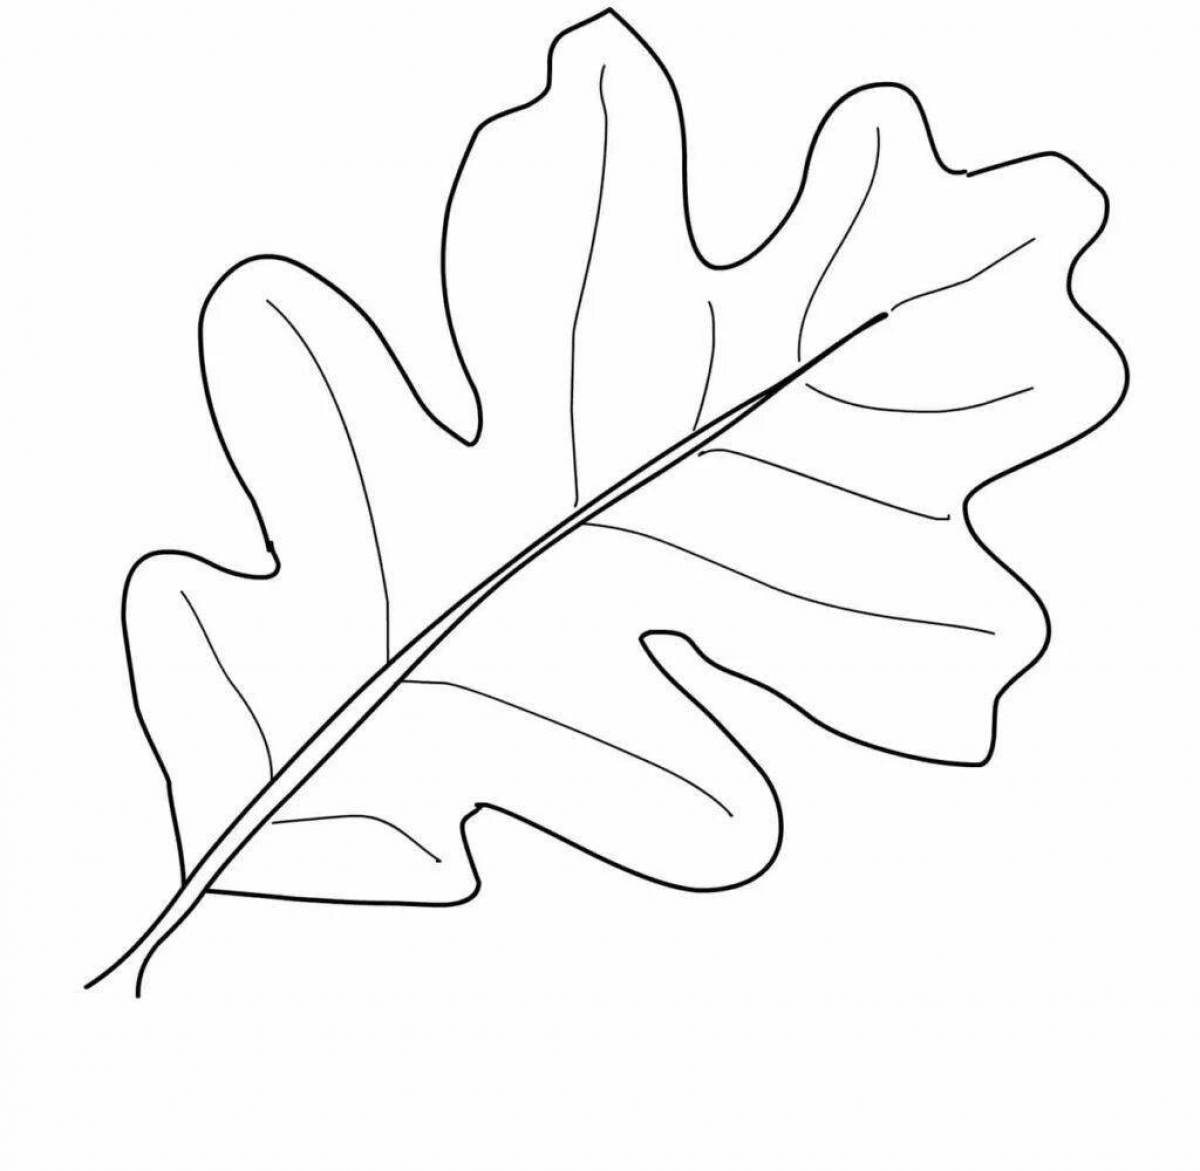 Charming oak leaf coloring page